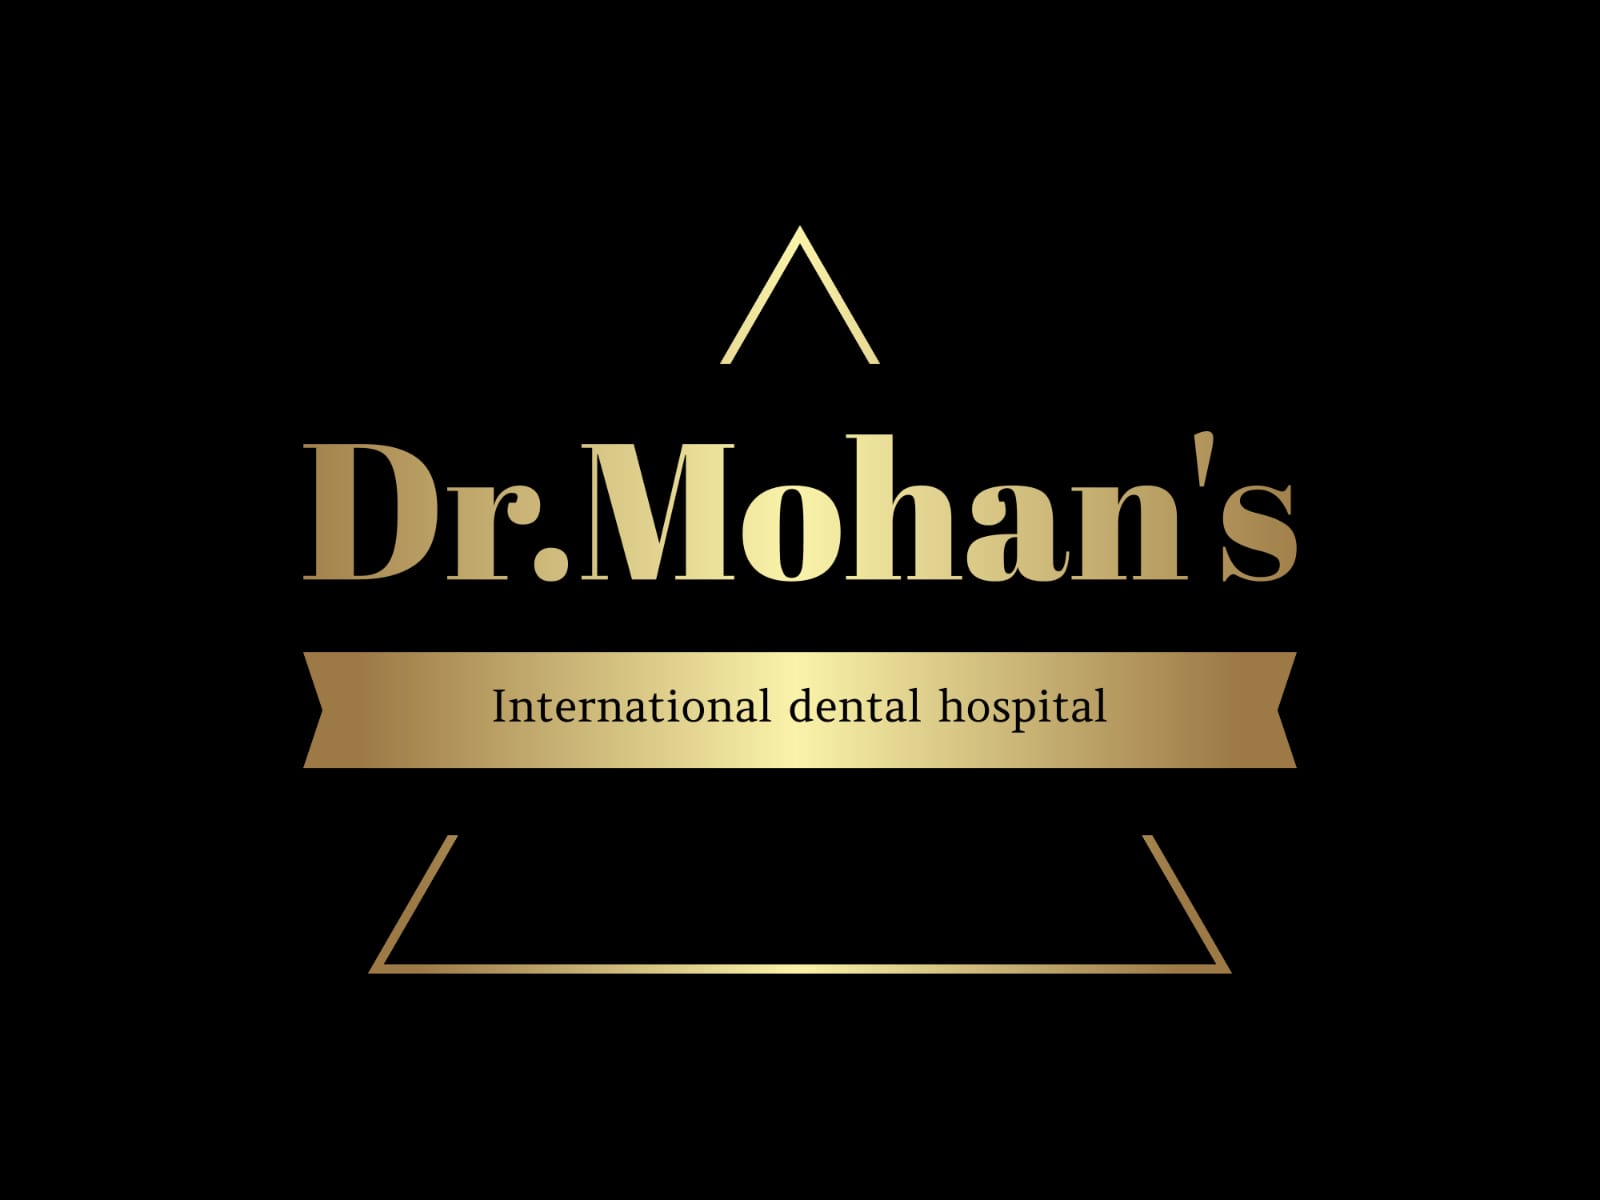 Dr. Mohan's international dental hospital